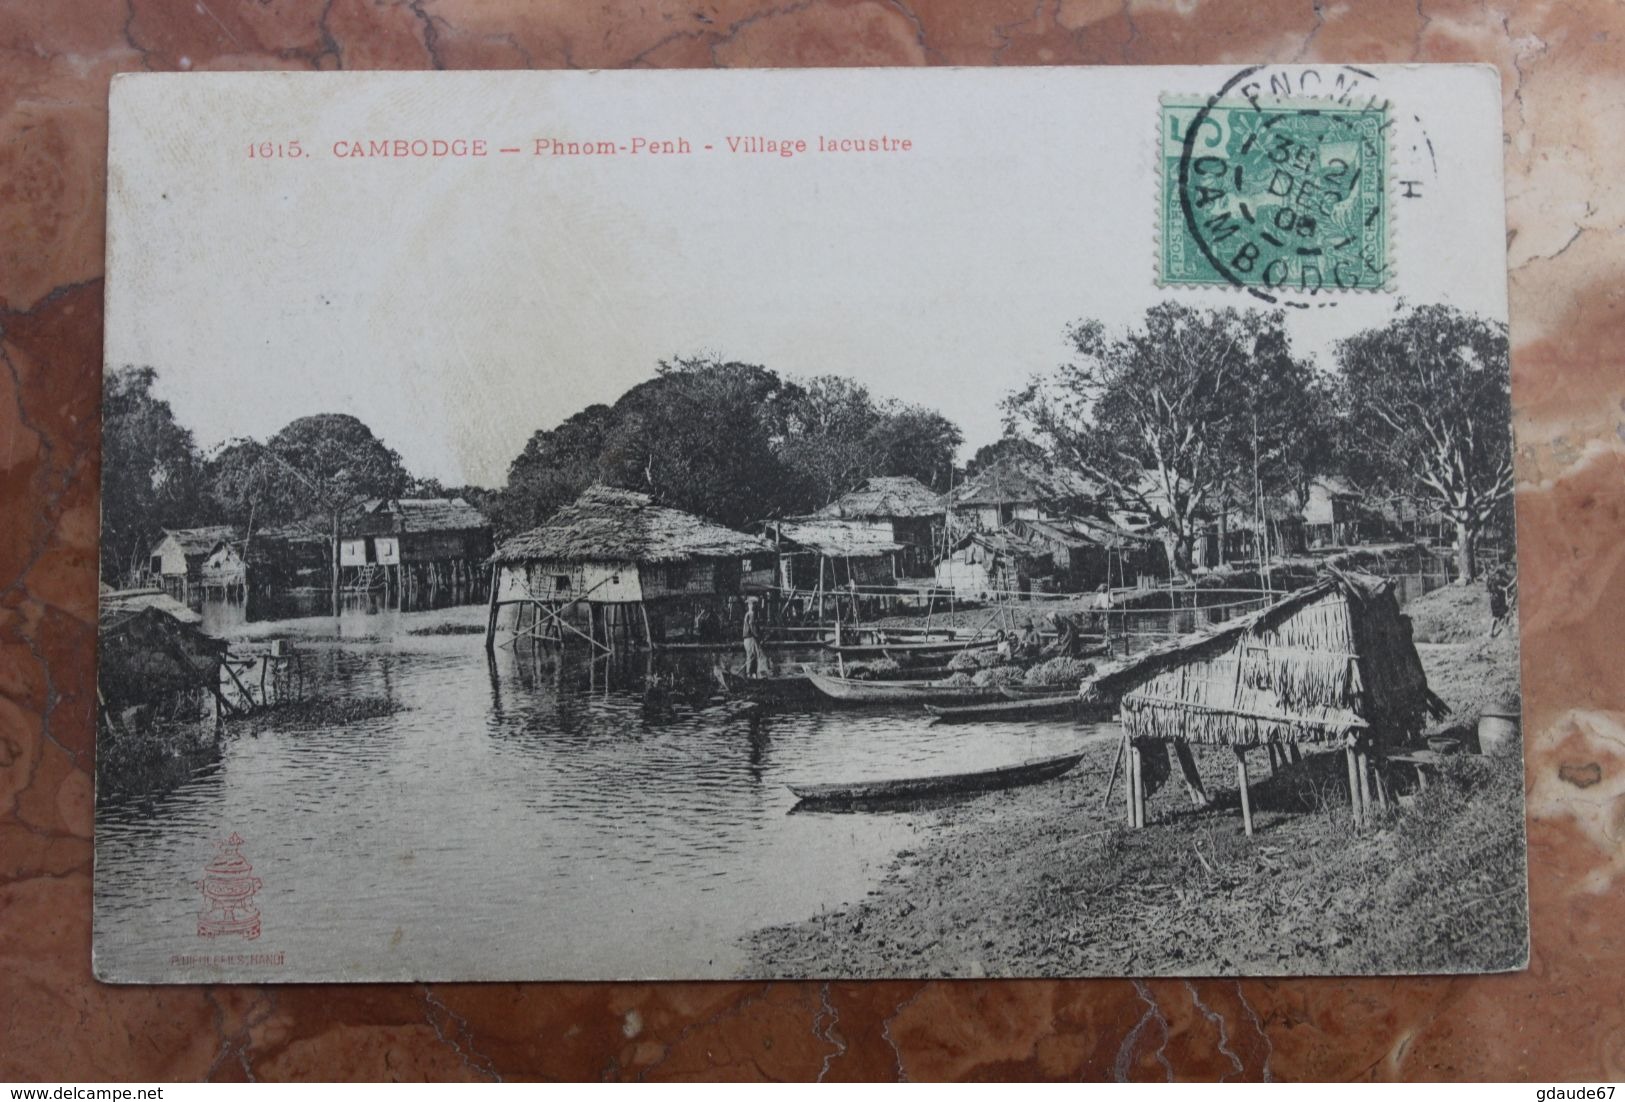 PHNOM-PENH (CAMBODGE) - 1615. VILLAGE LACUSTRE - Cambogia